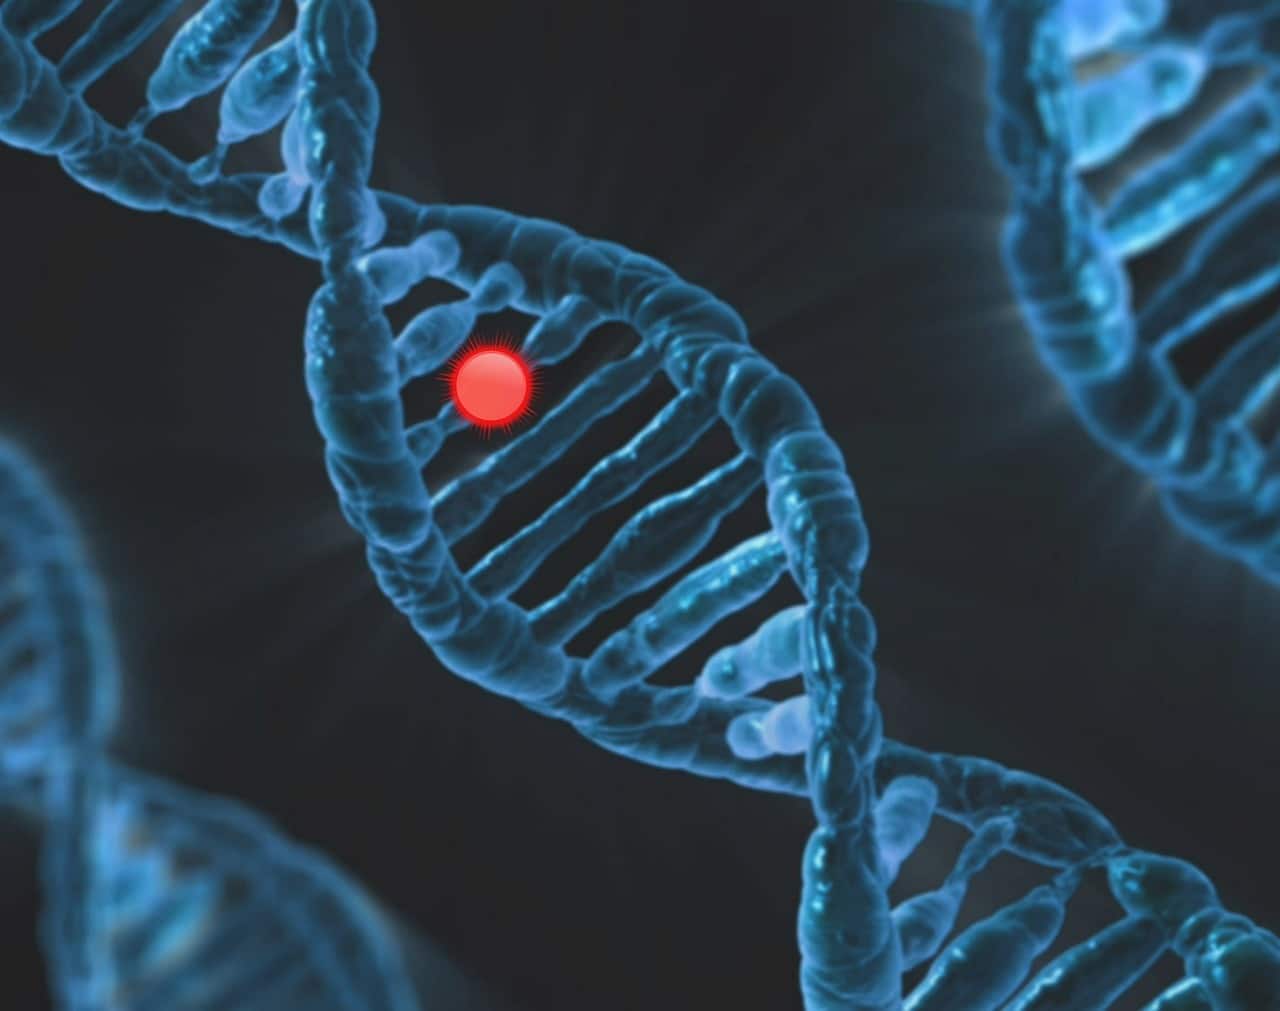 Spotting a mutation in a genetic strand